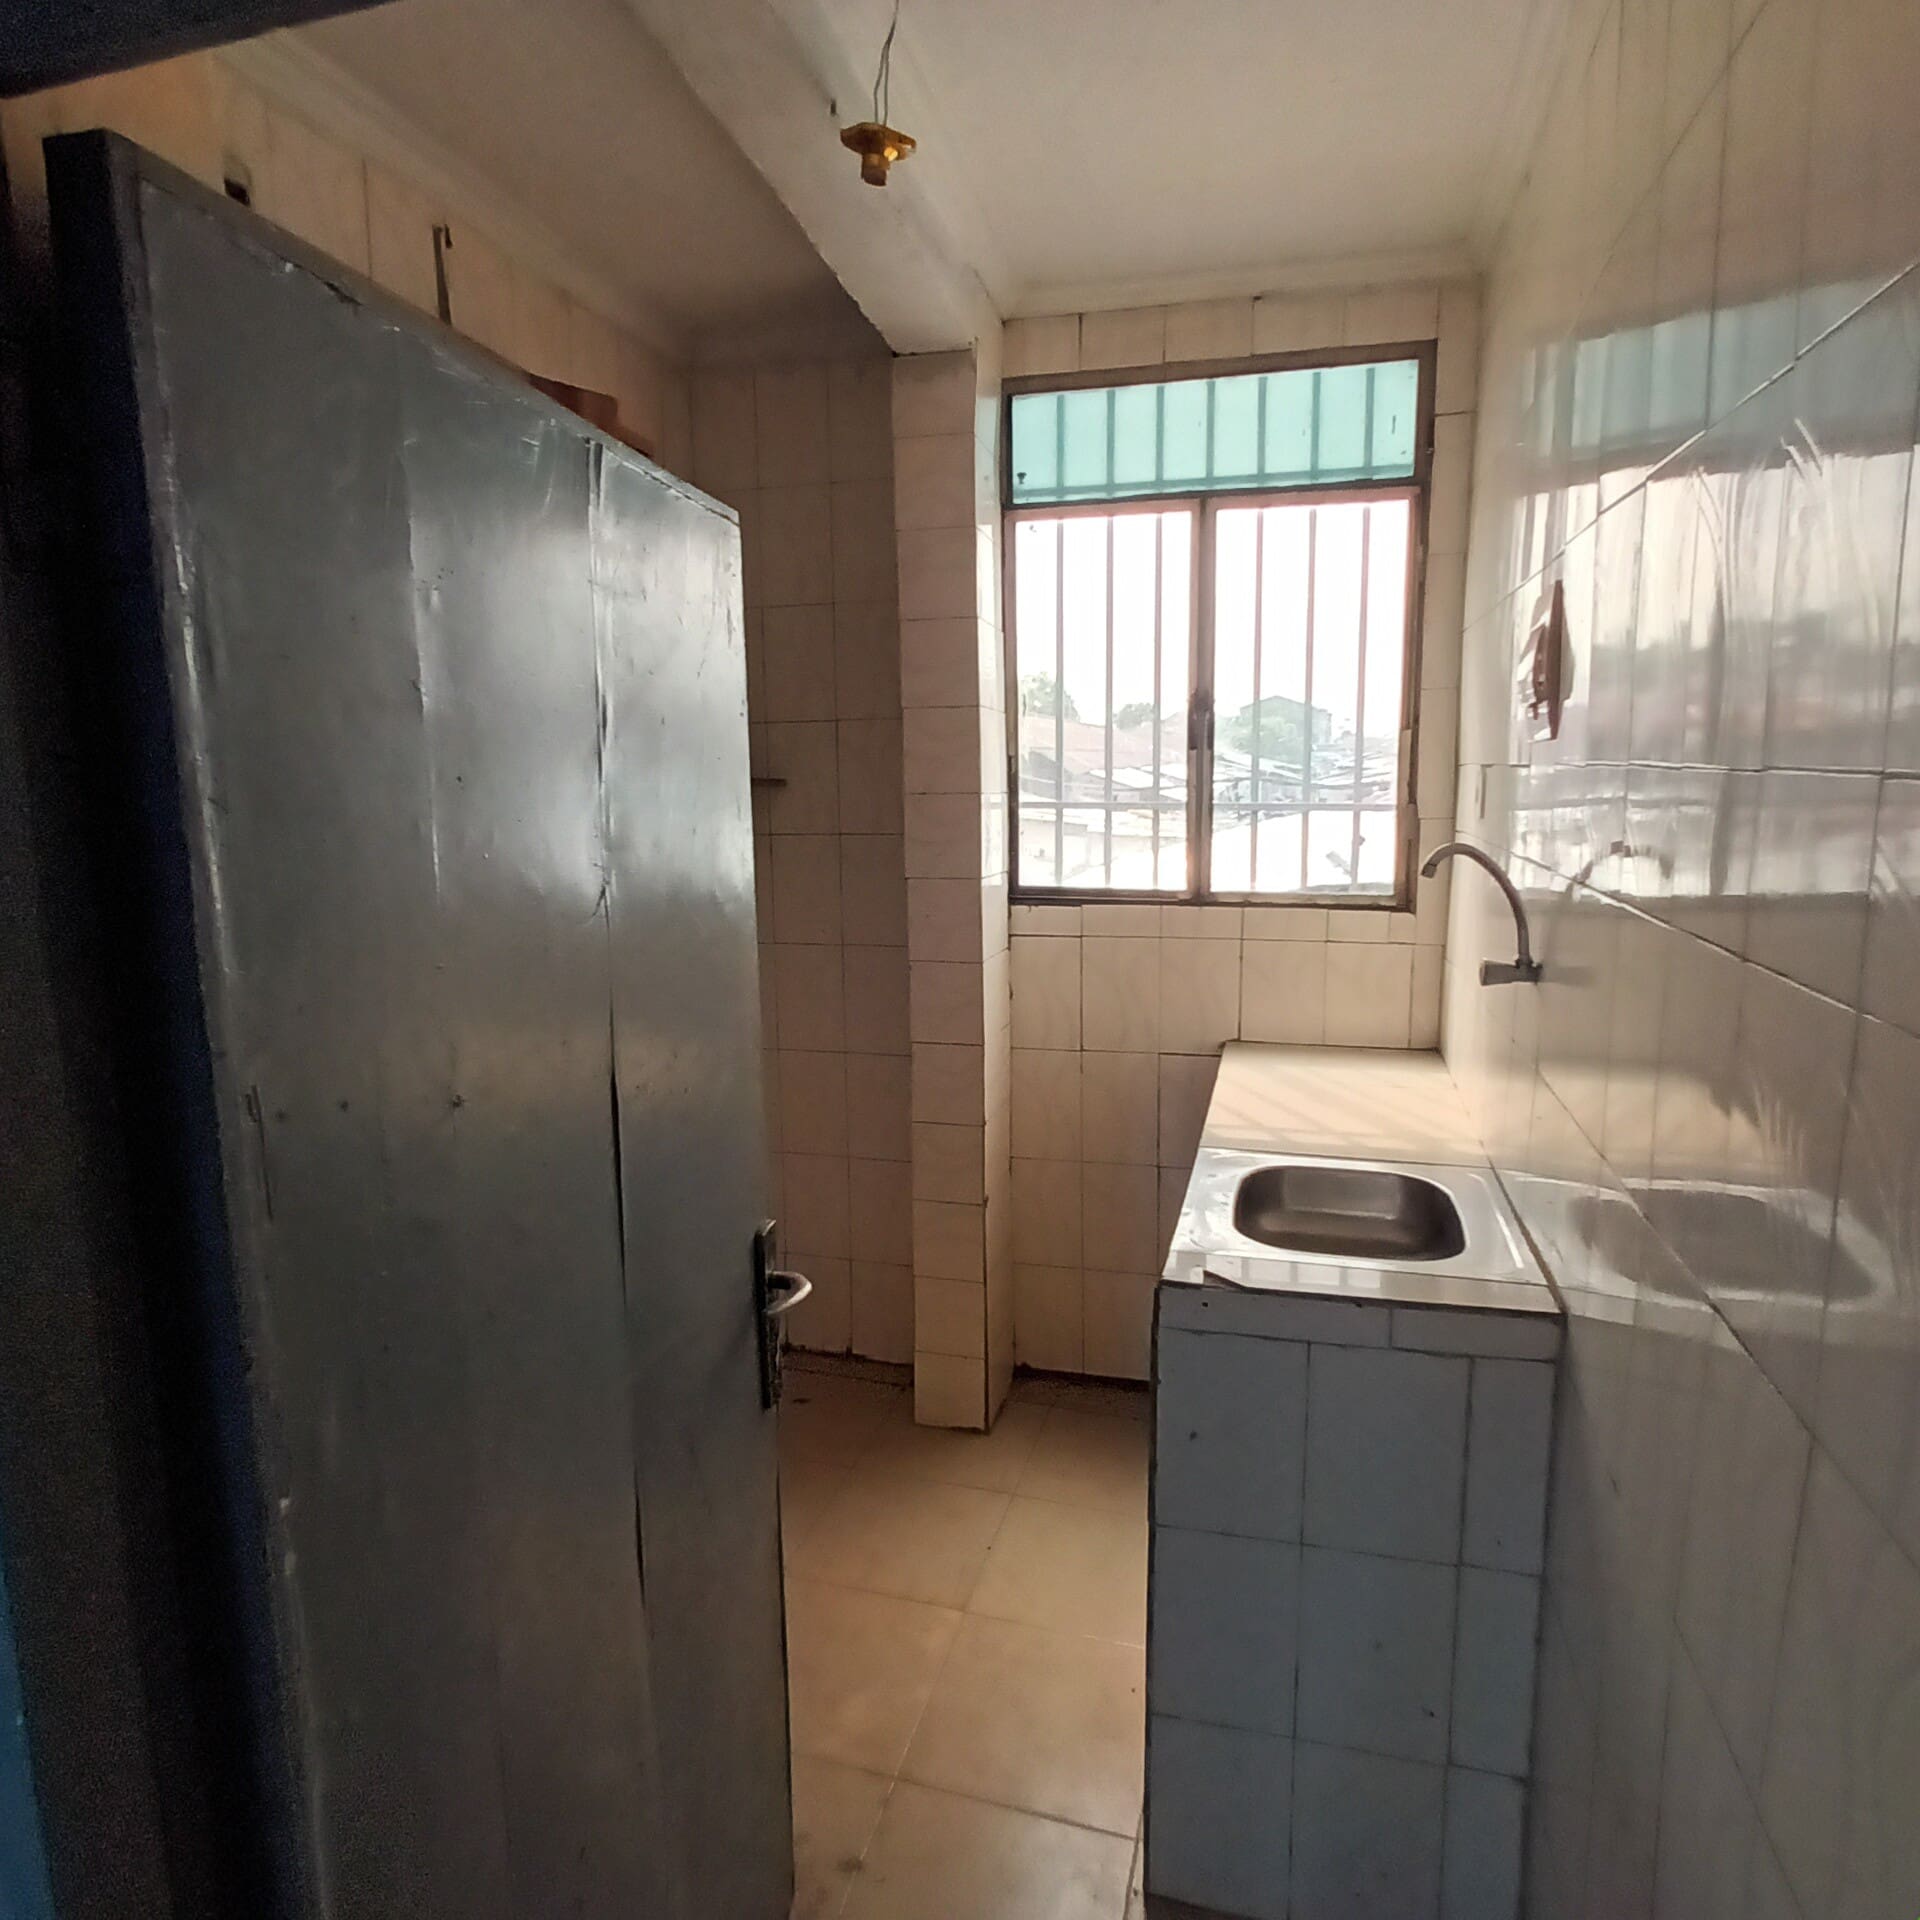 Appartement à louer au 1er Niveau à Ngaliema Mboka Sika